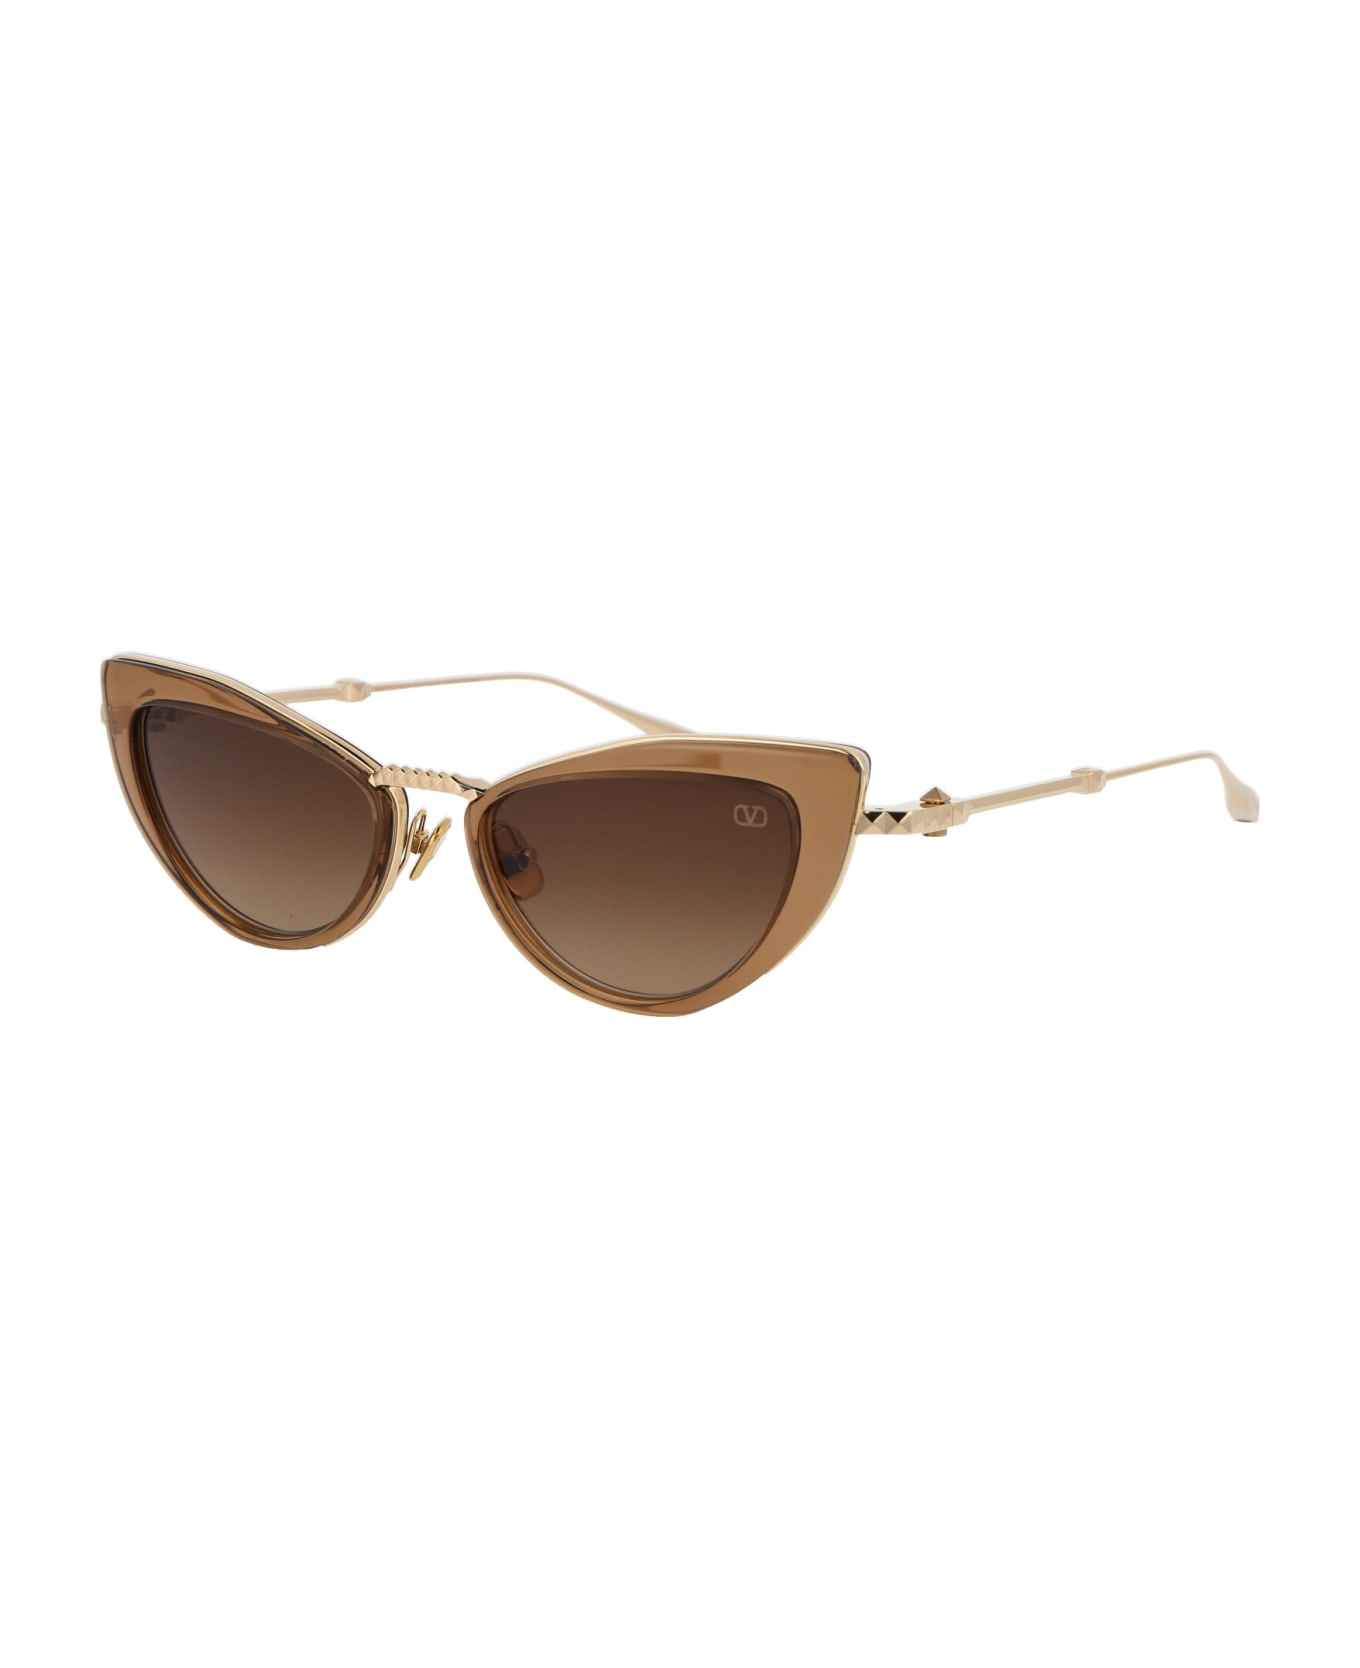 Valentino Eyewear Viii Sunglasses - LIGHT GOLD CRYSTAL MEDIUM BROWN W/ DARK BROWN TO LIGHT BROWN